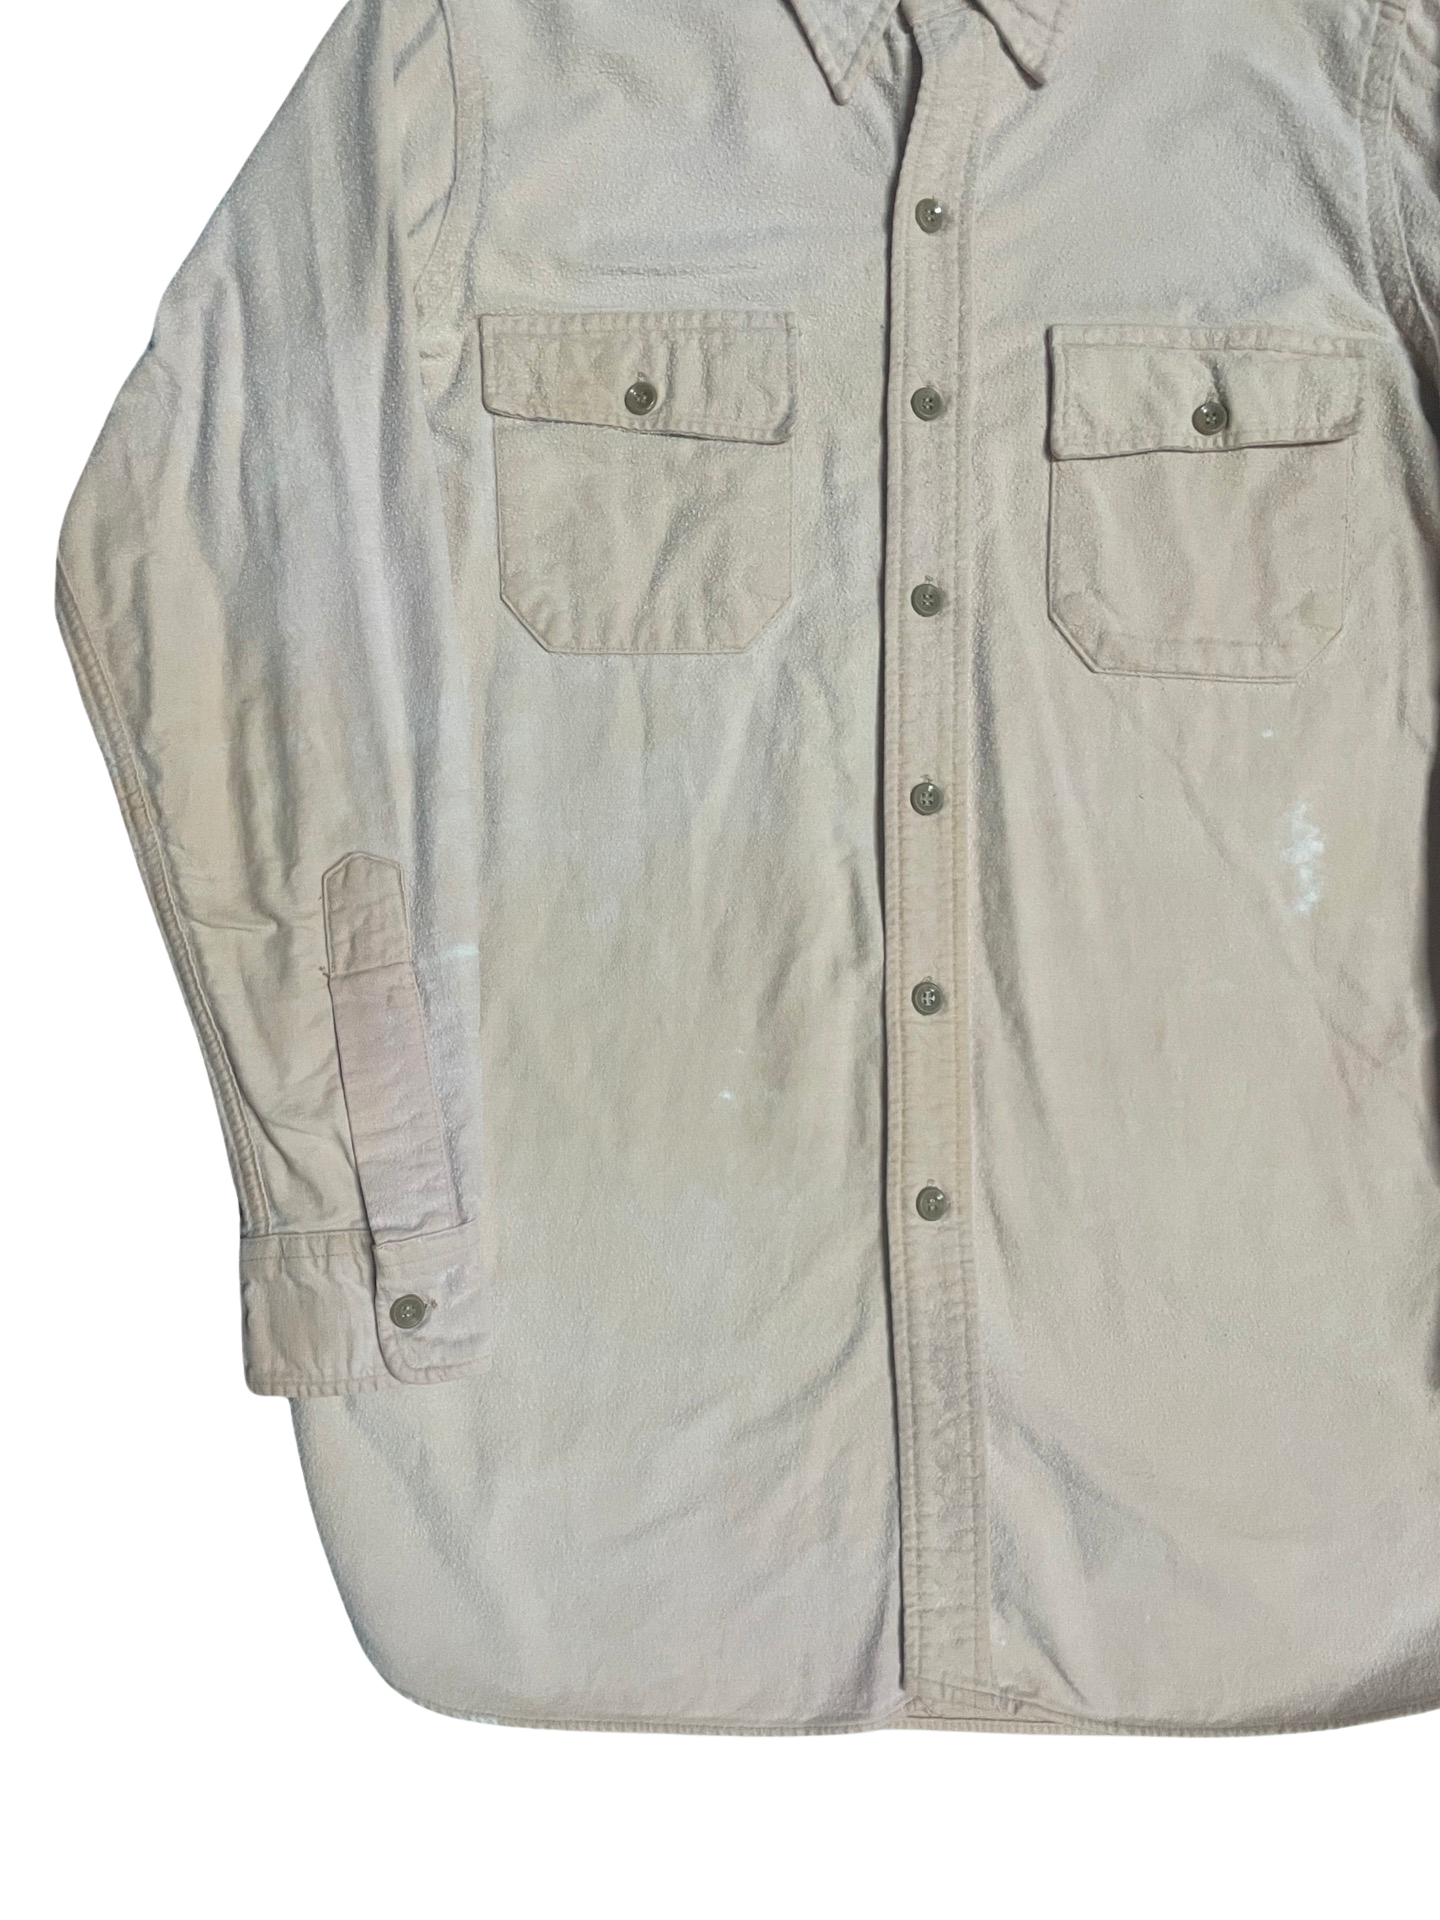 • 1970’s/80’s Mens L.L Bean Button Up Shirt